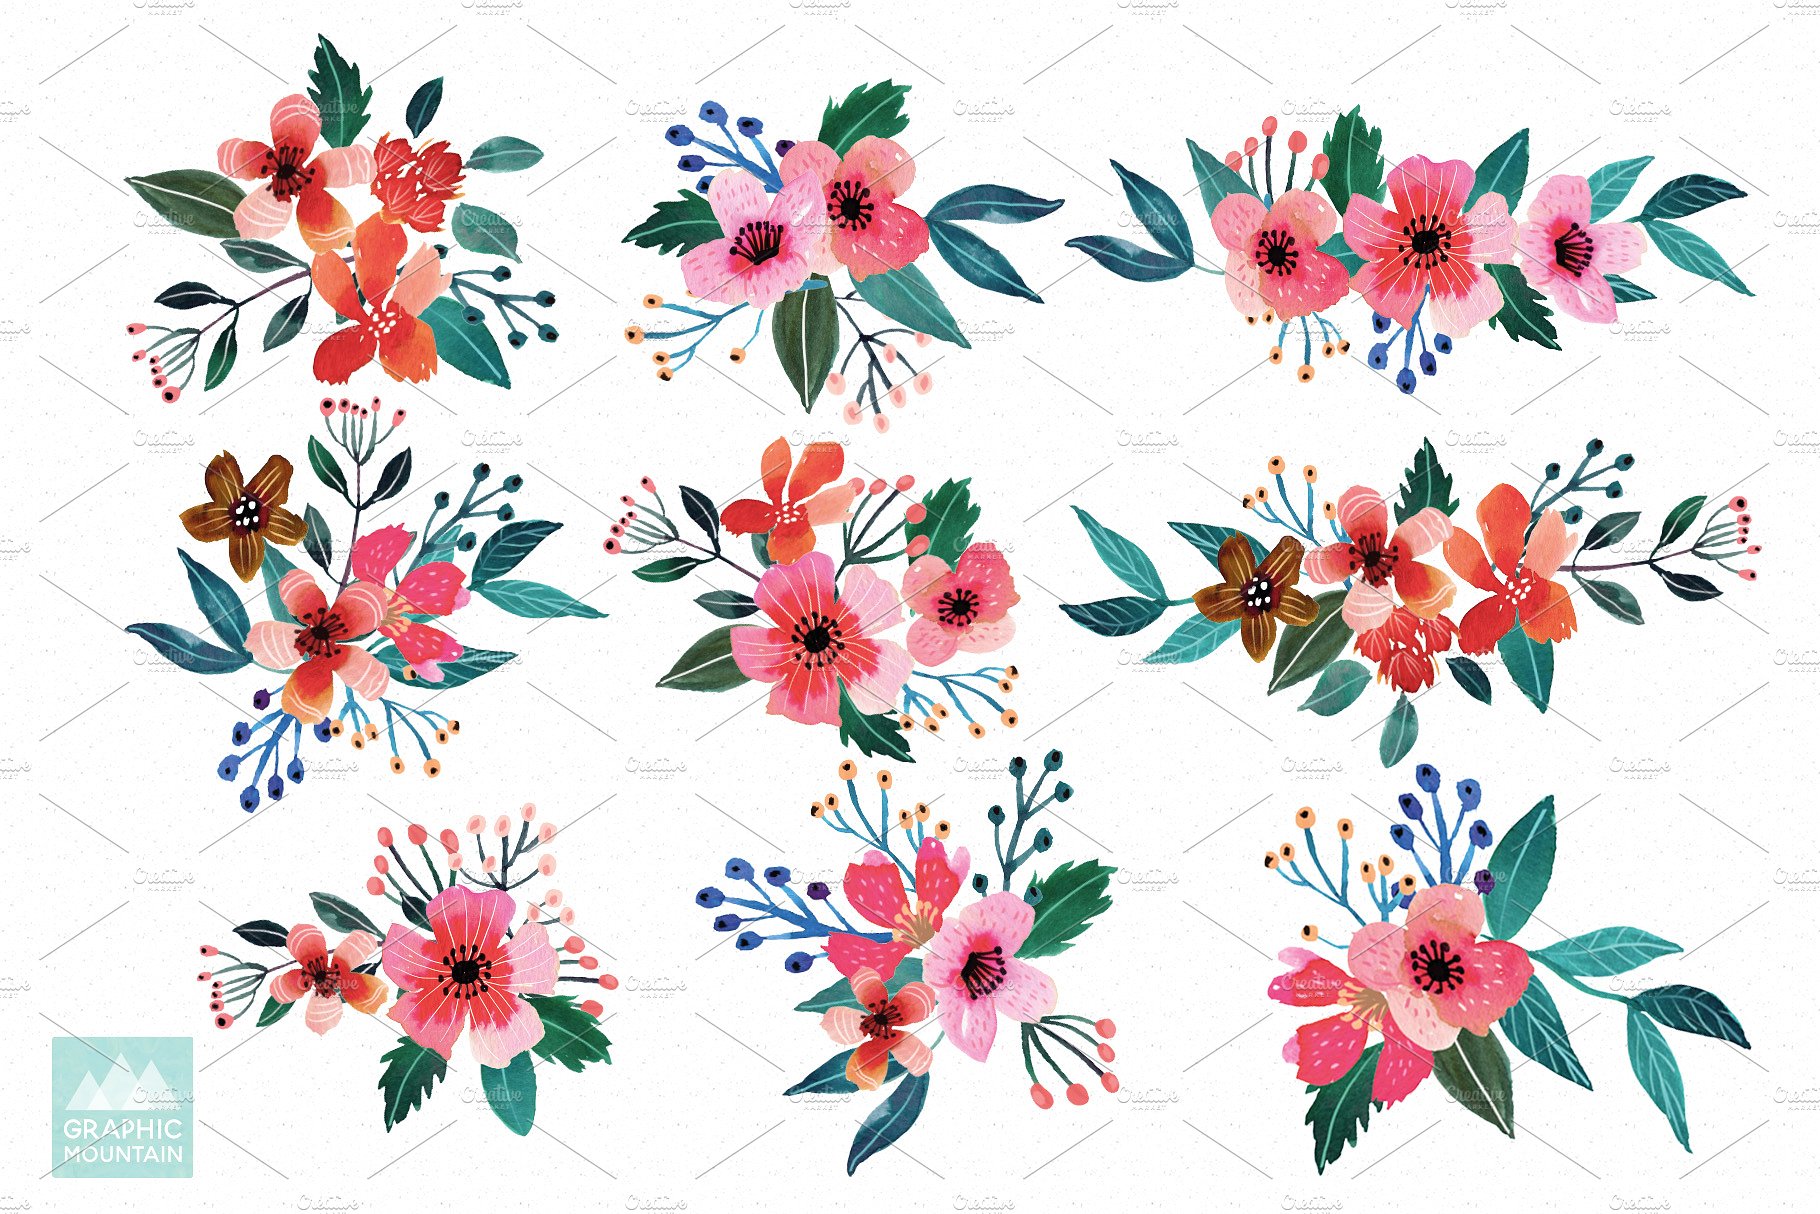 艳丽野花水彩插画集 Wildflowers Watercolor Collection插图(3)